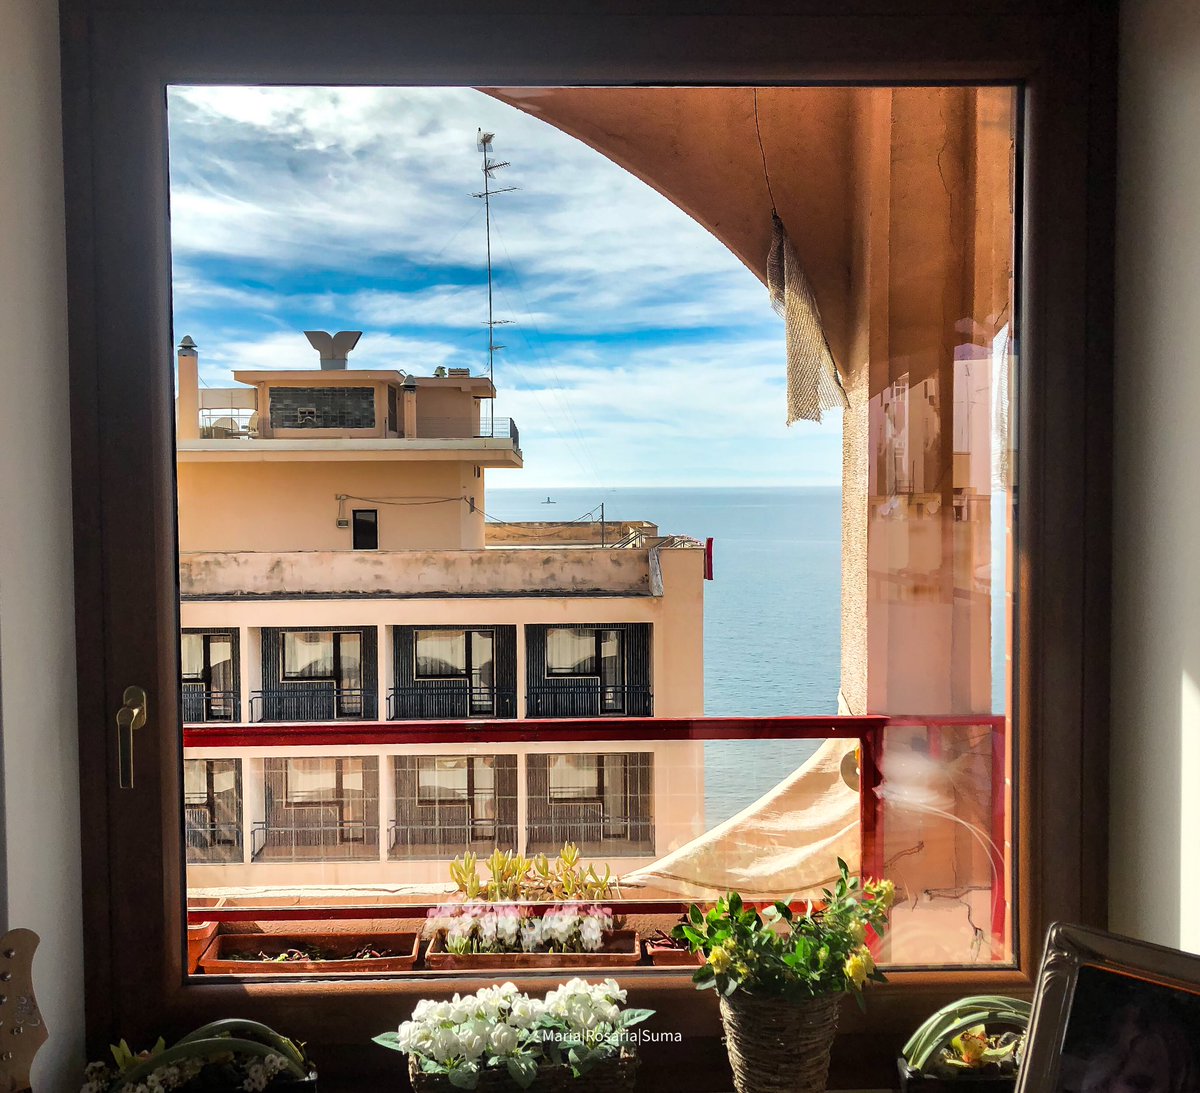 #finestre #taranto #mare #jonio #rosso #panorama #weareinpuglia #puglia #colore #iodio #volgotaranto #taranto #lungomareditaranto